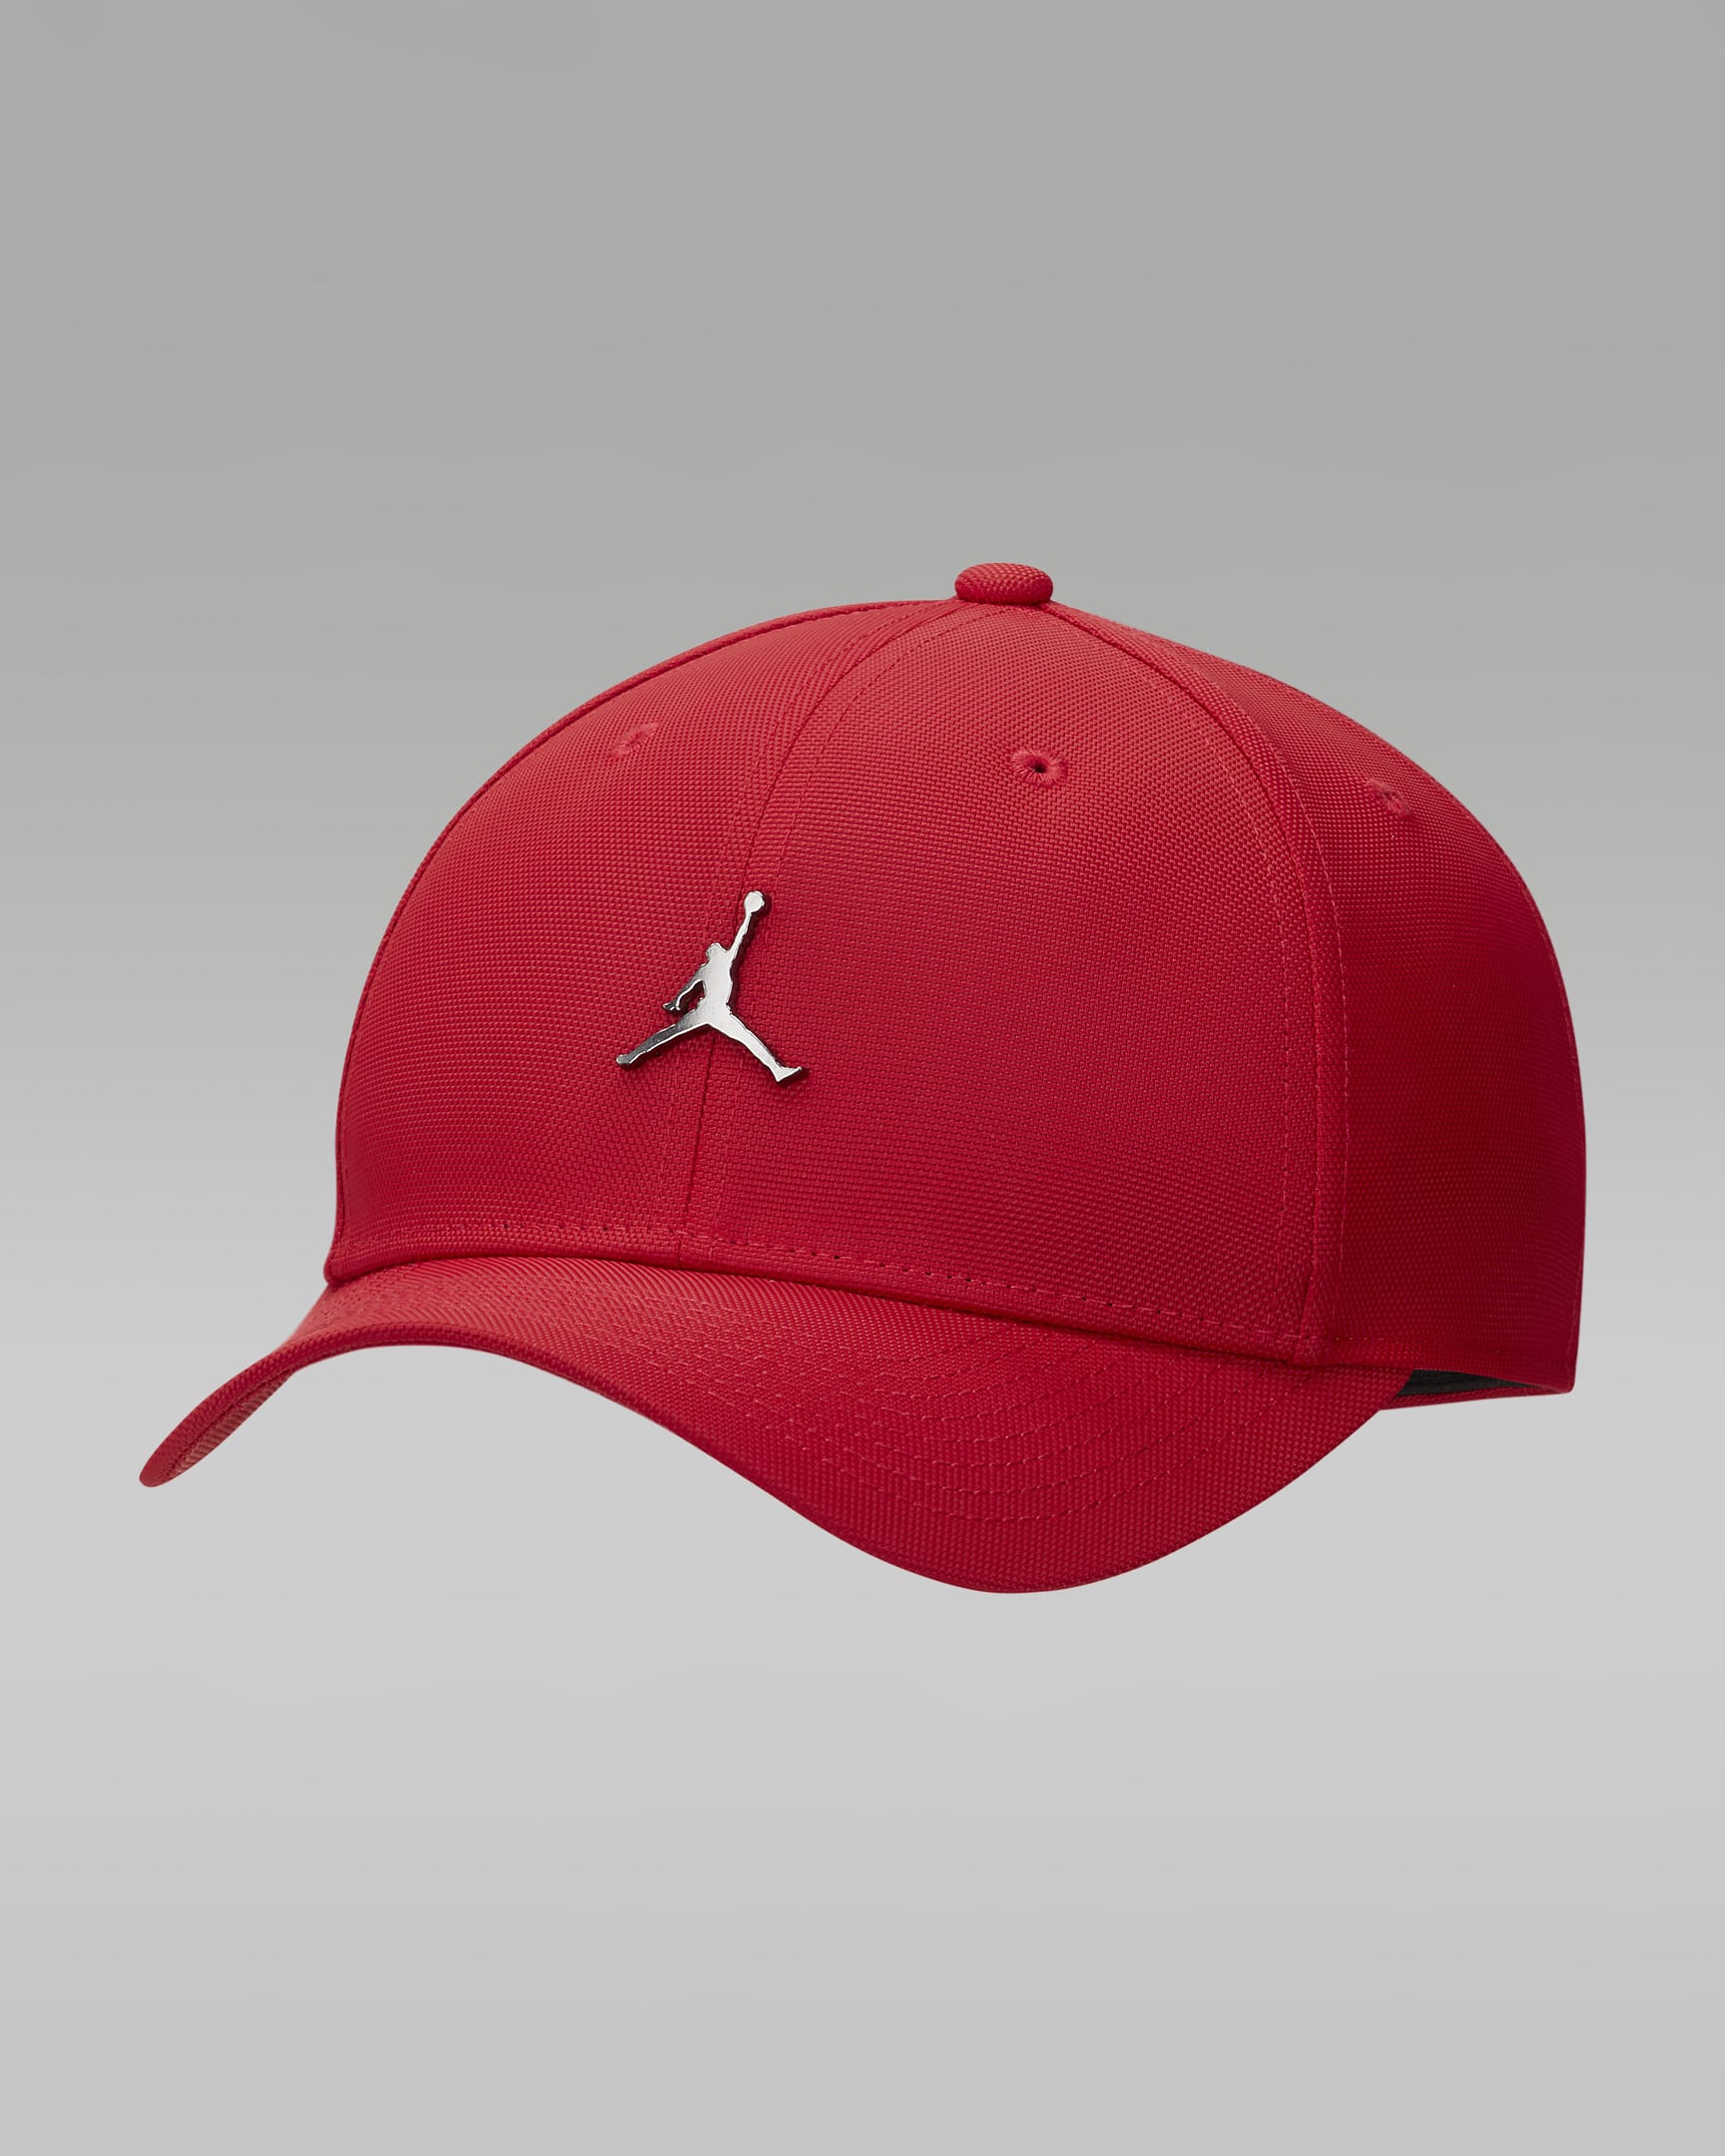 Jordan Rise Cap Adjustable Hat - Gym Red/Black/Black/Gunmetal